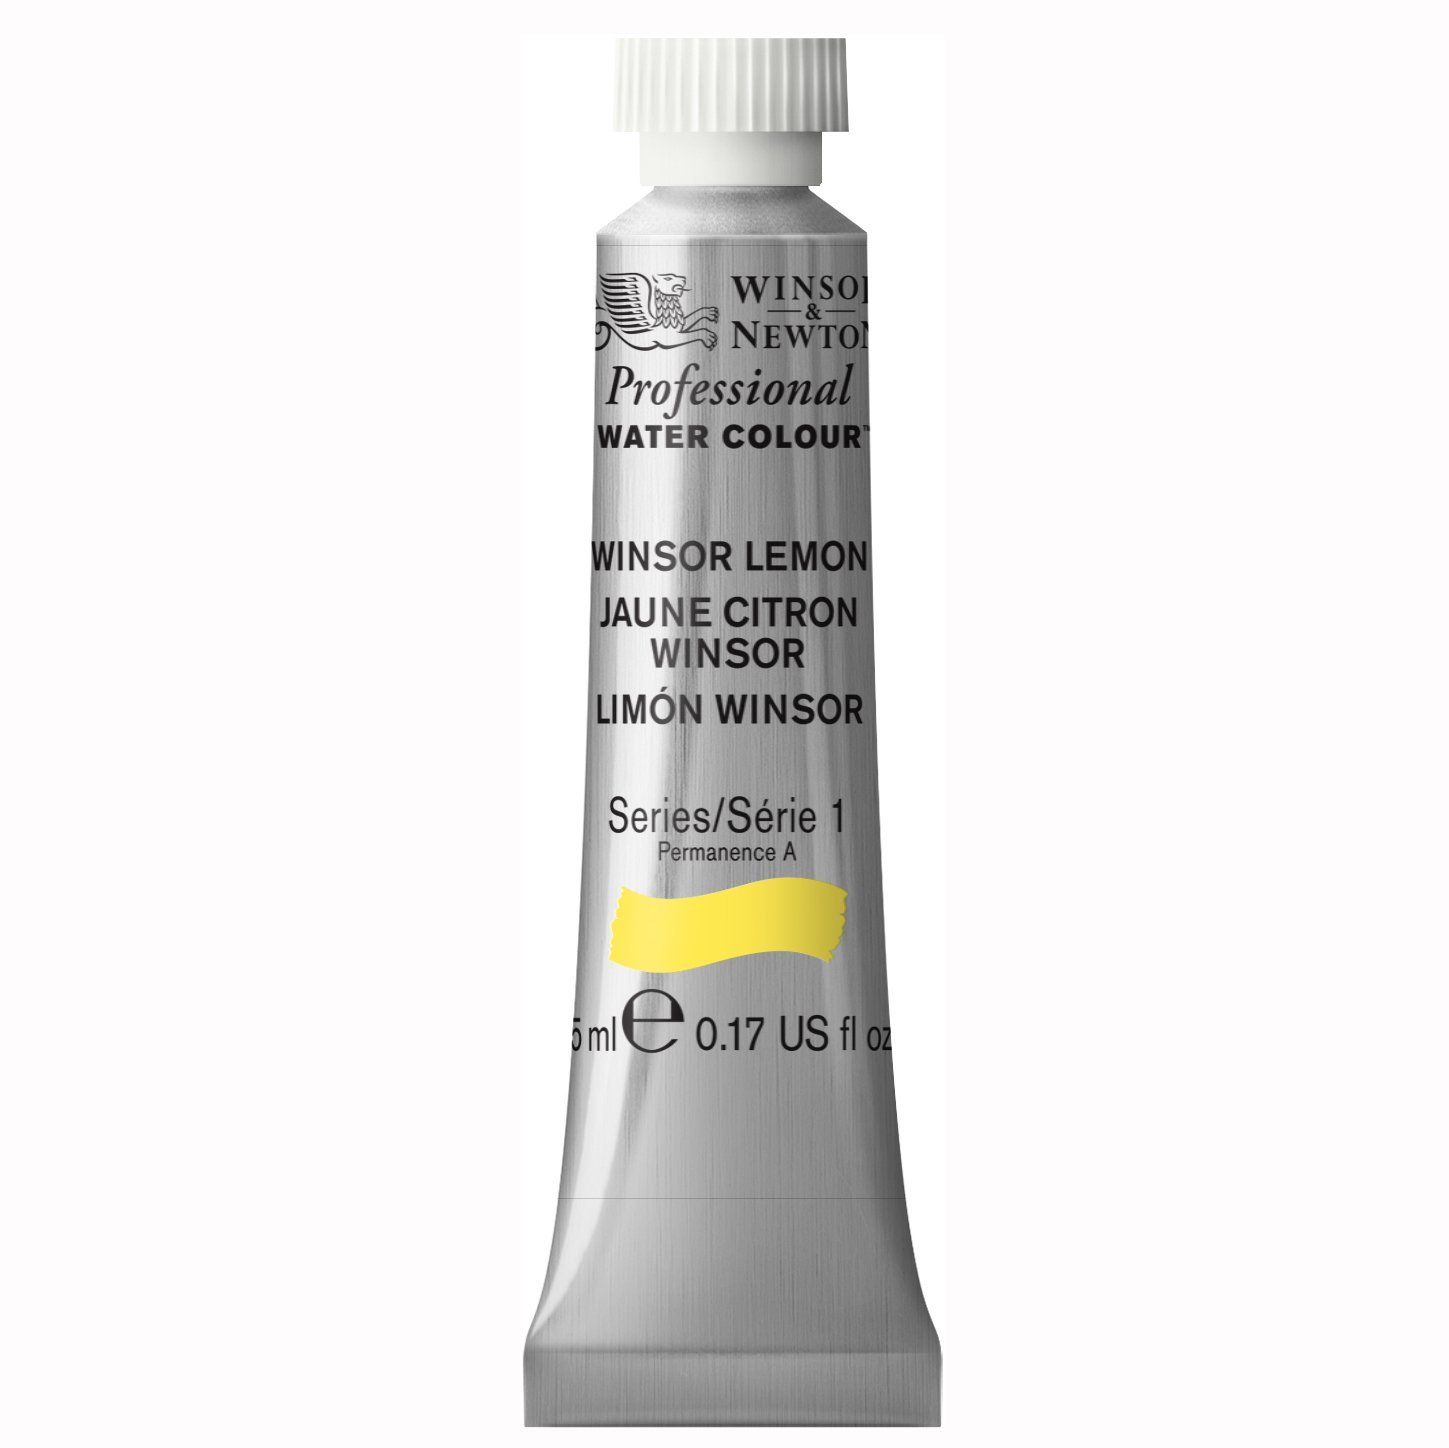 Winsor & Newton Watercolour Paint - Winsor Lemon 5ml